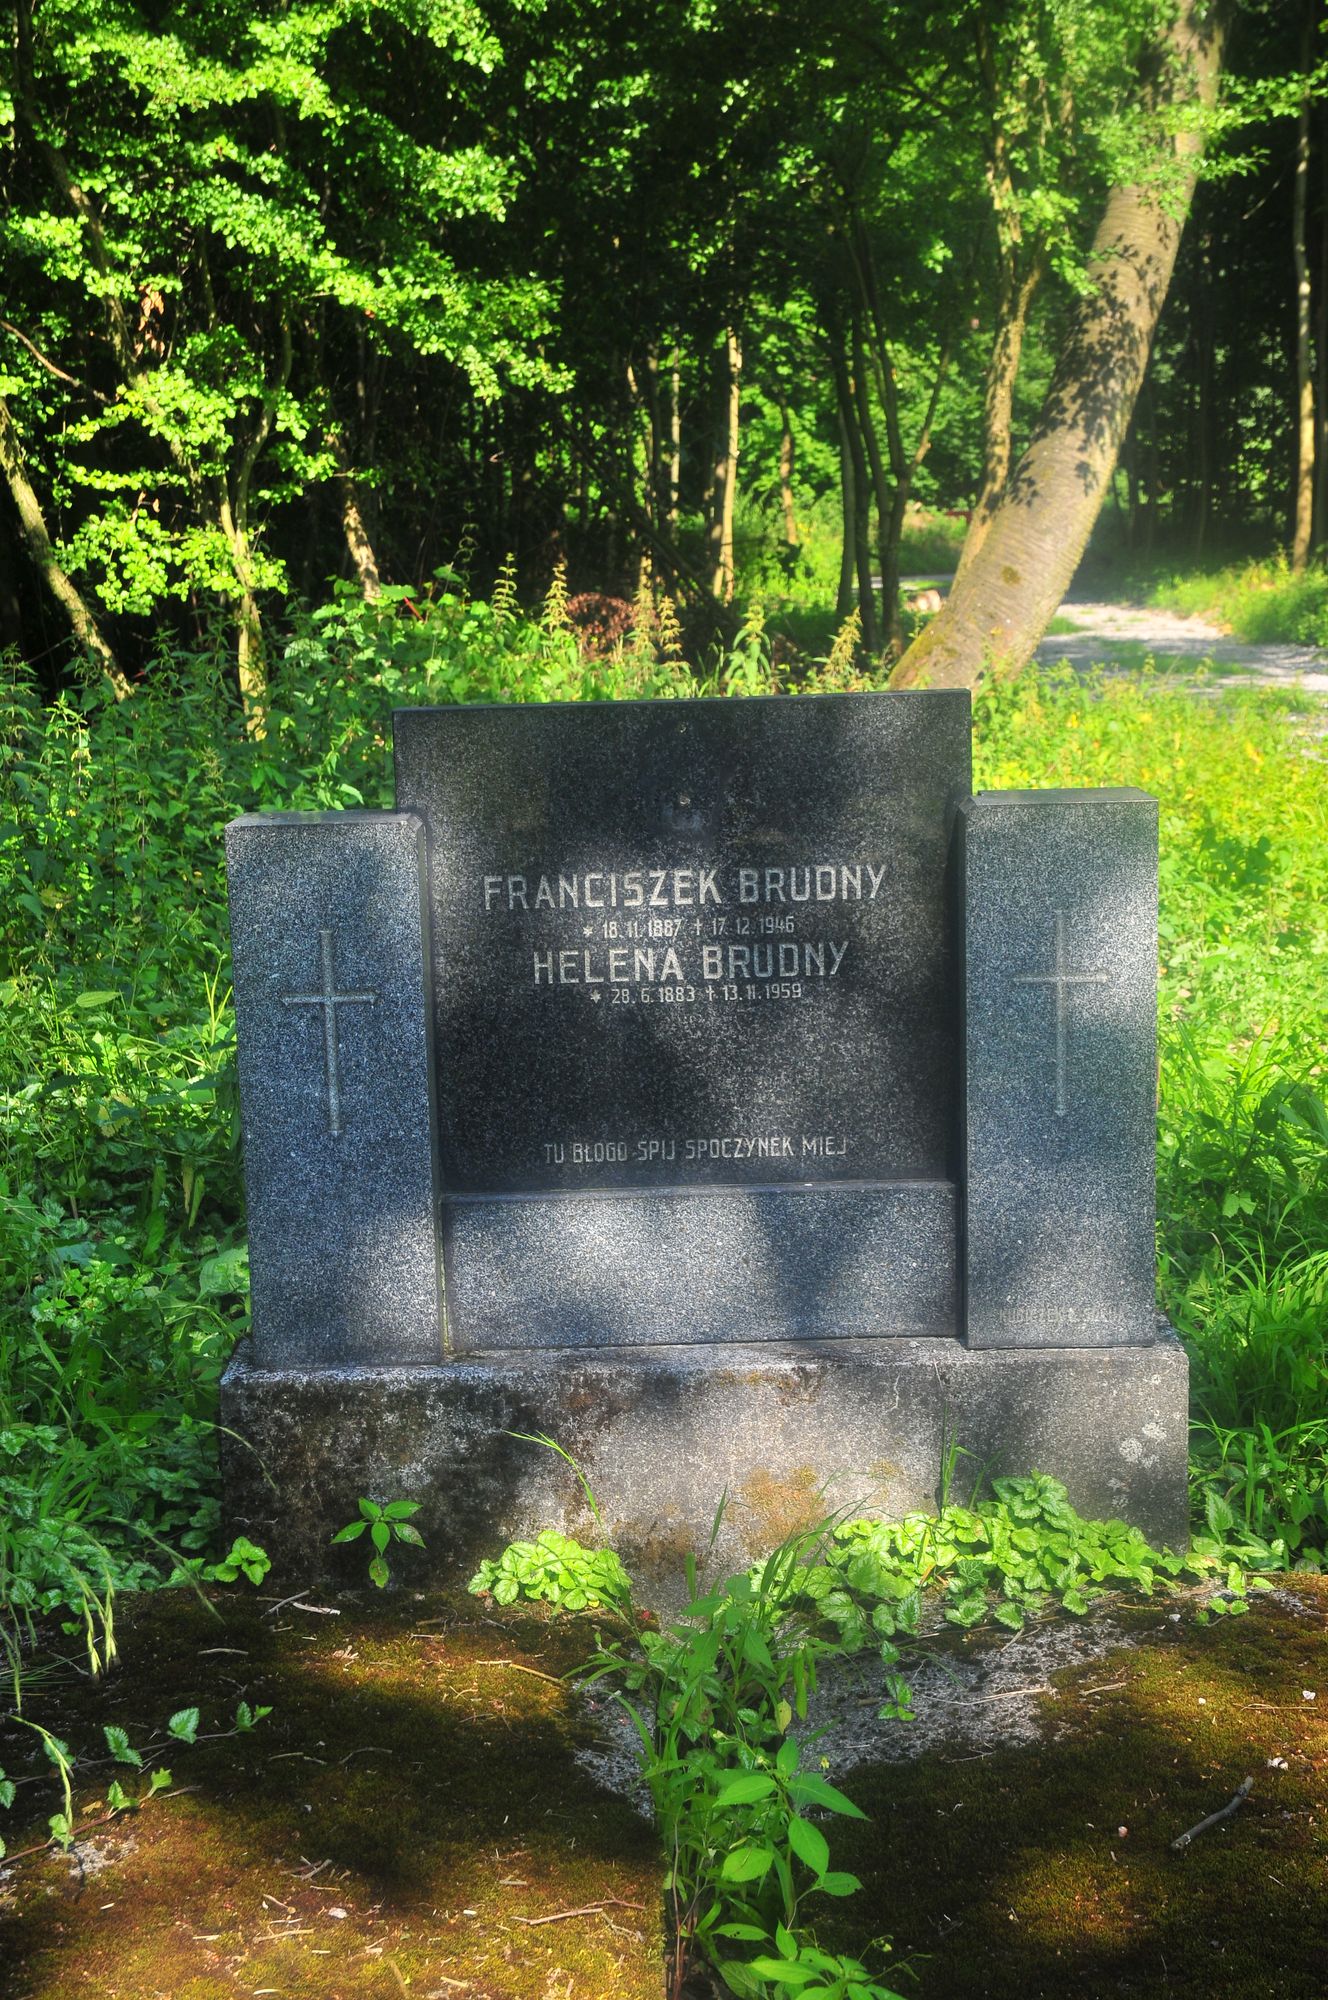 Tombstone of the Brudny family